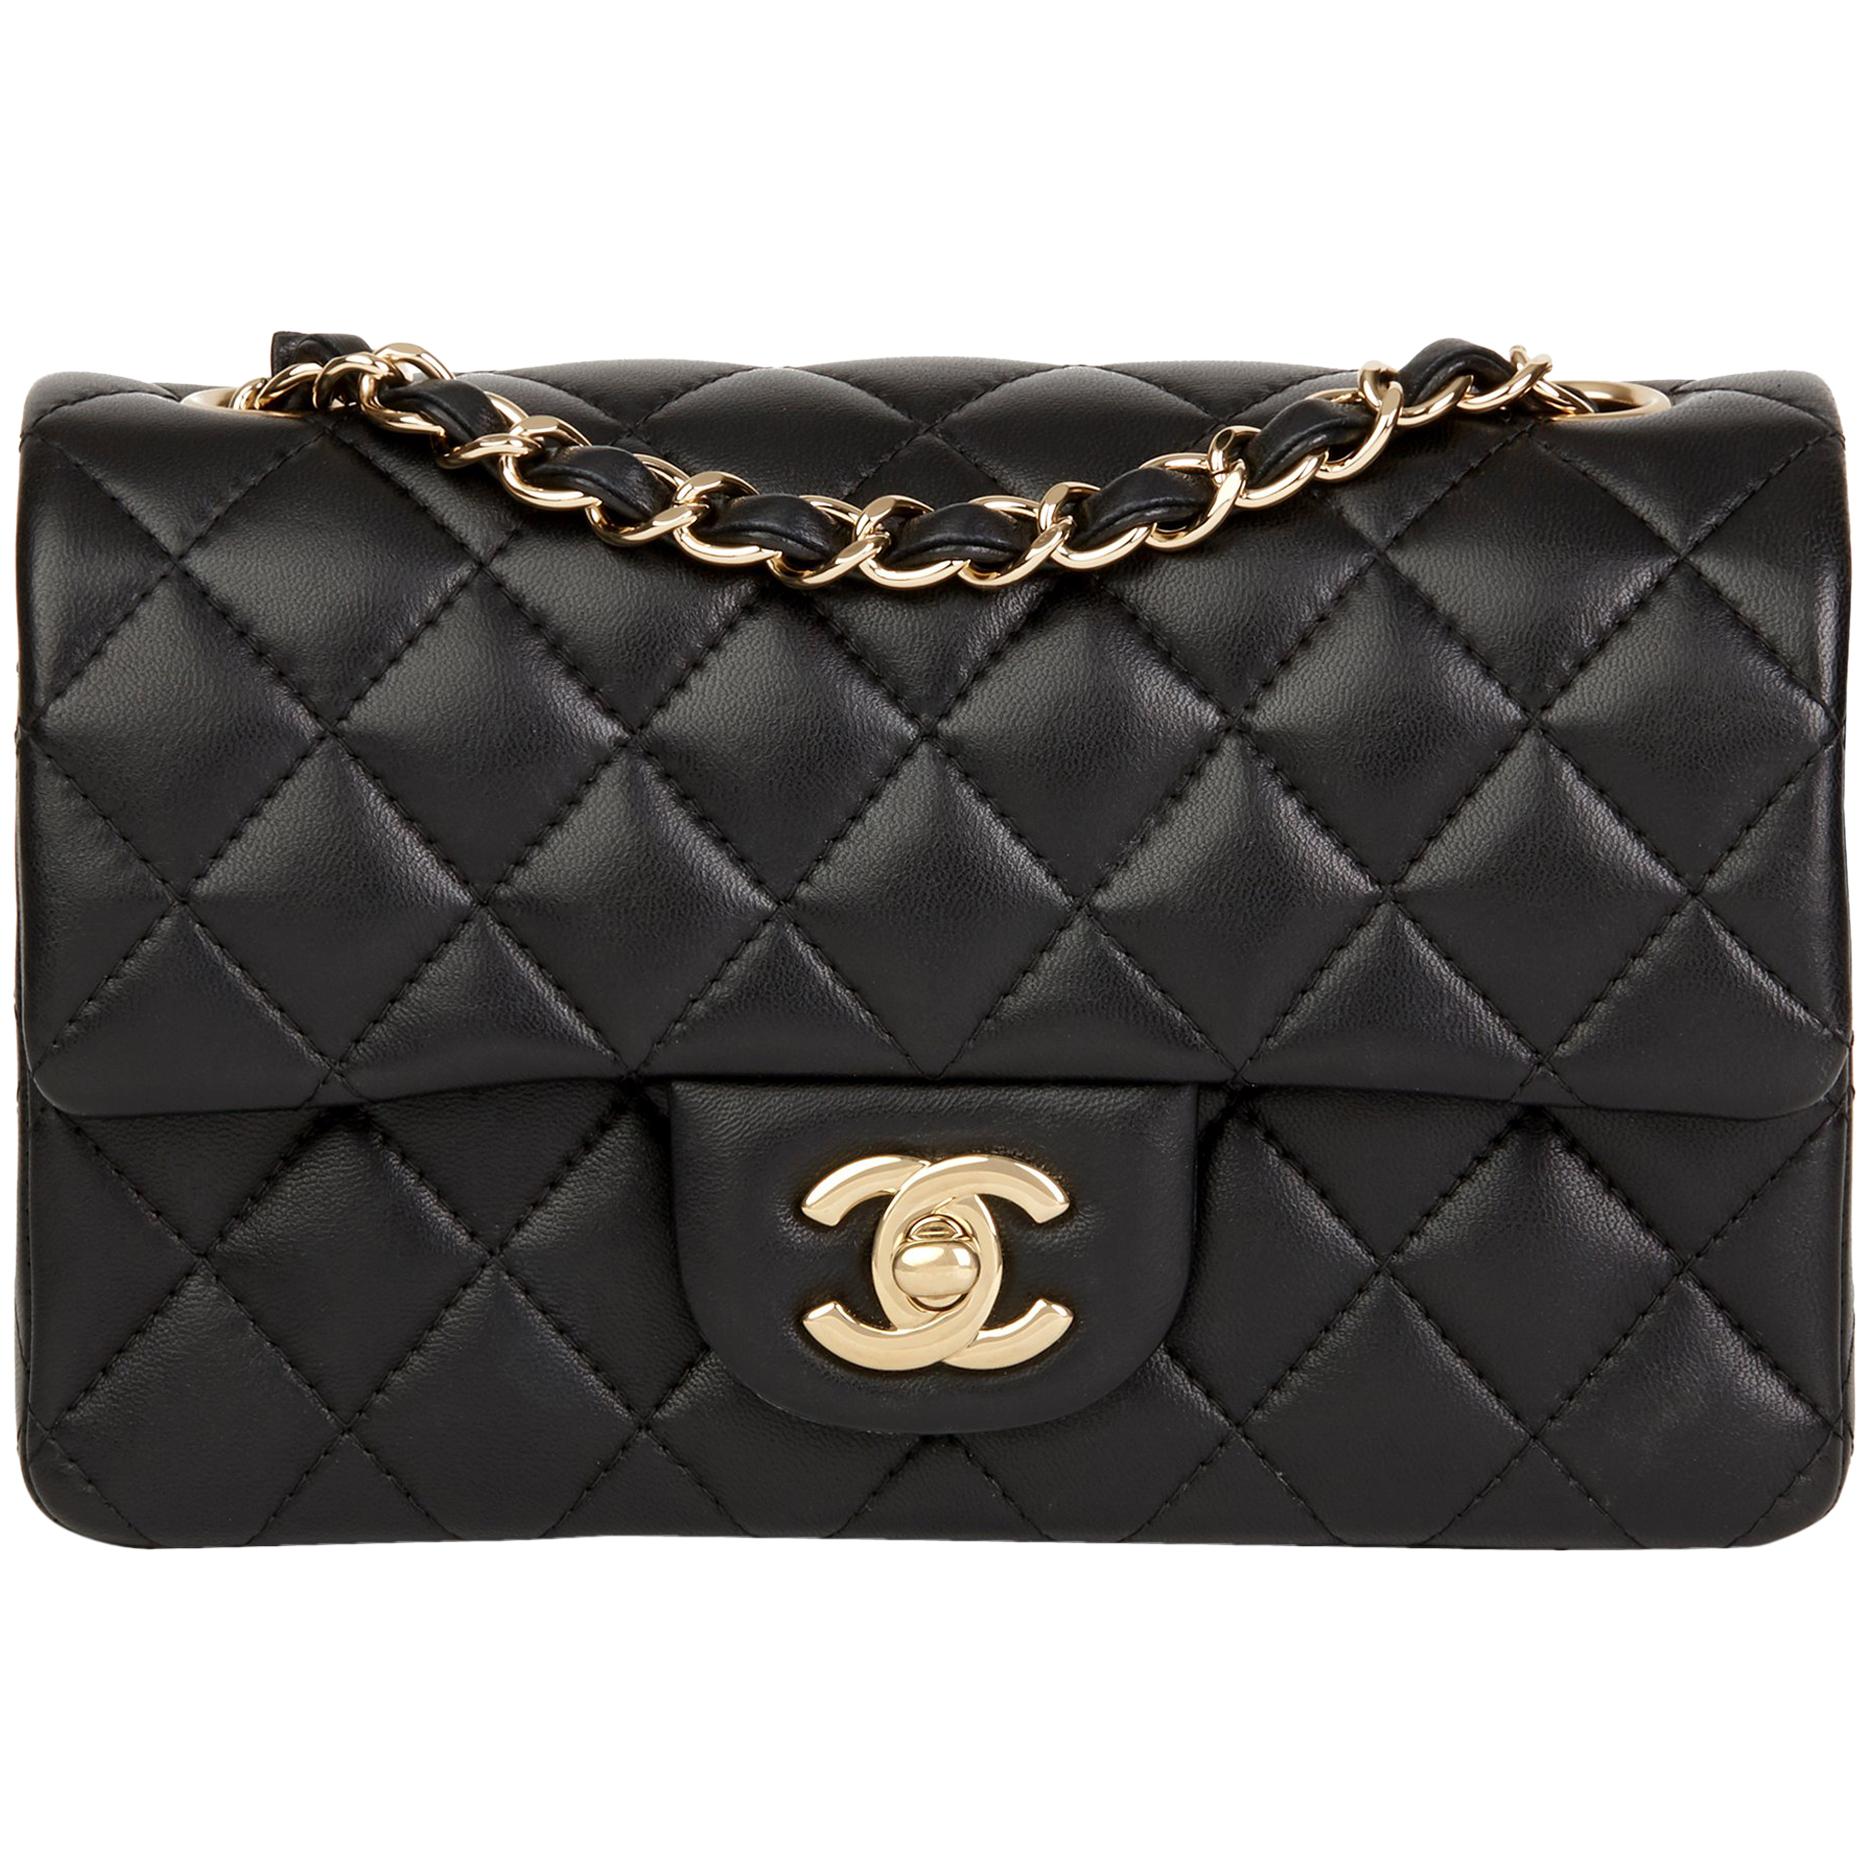 2017 Chanel Black Quilted Lambskin Rectangular Mini Flap Bag